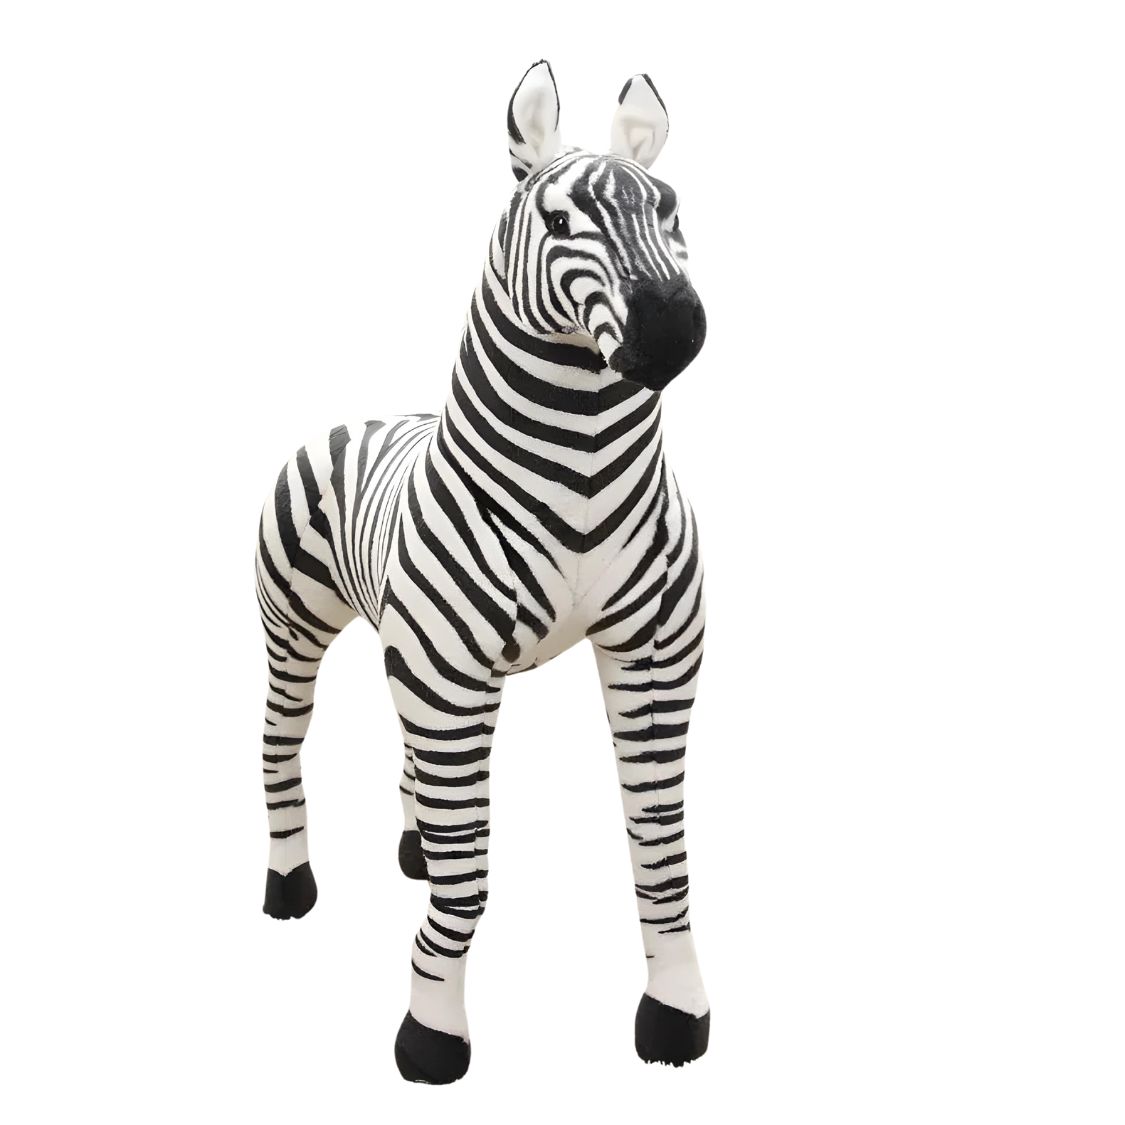 Large Zebra Stuffed Toy